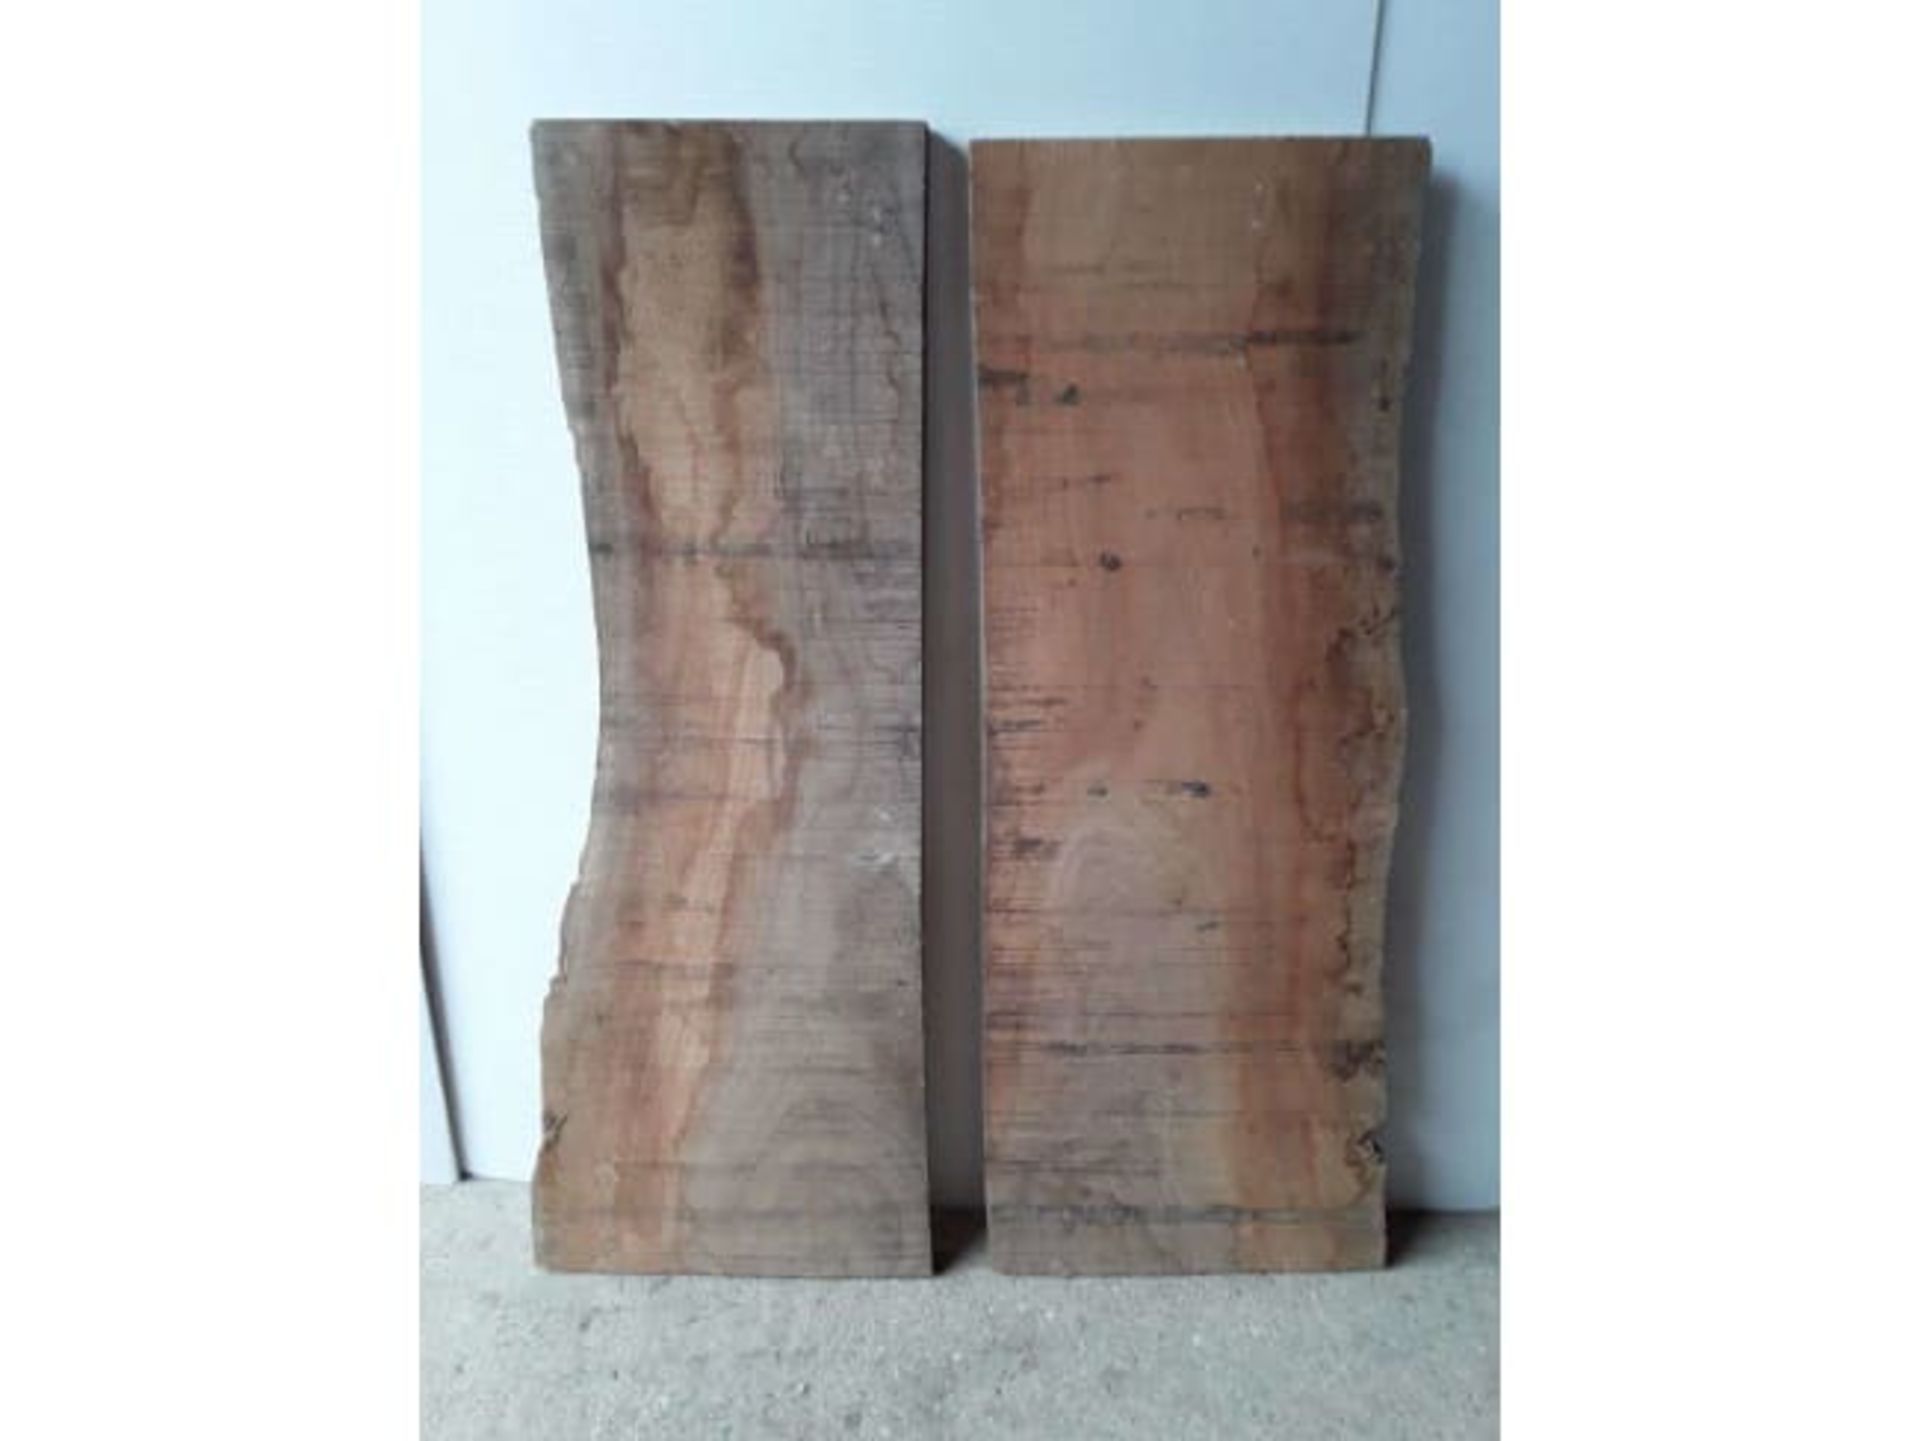 2 x Hardwood Kiln Dried Timber Sawn Waney Edge English Elm Boards / Planks - Image 2 of 3